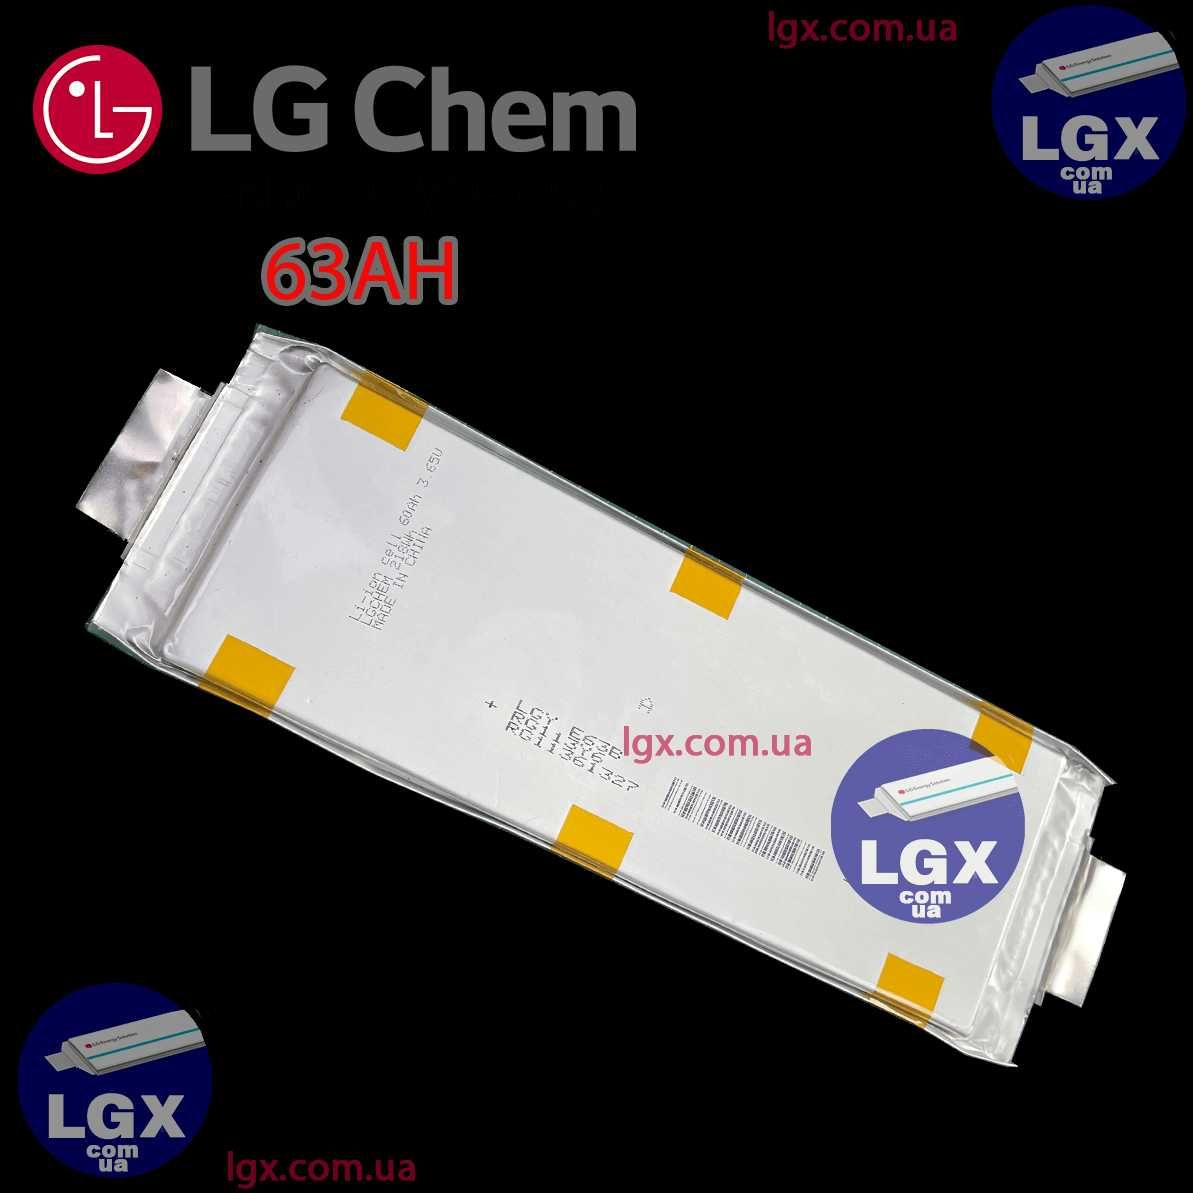 NMC LG Акумулятори LG-chem-e63B електровело